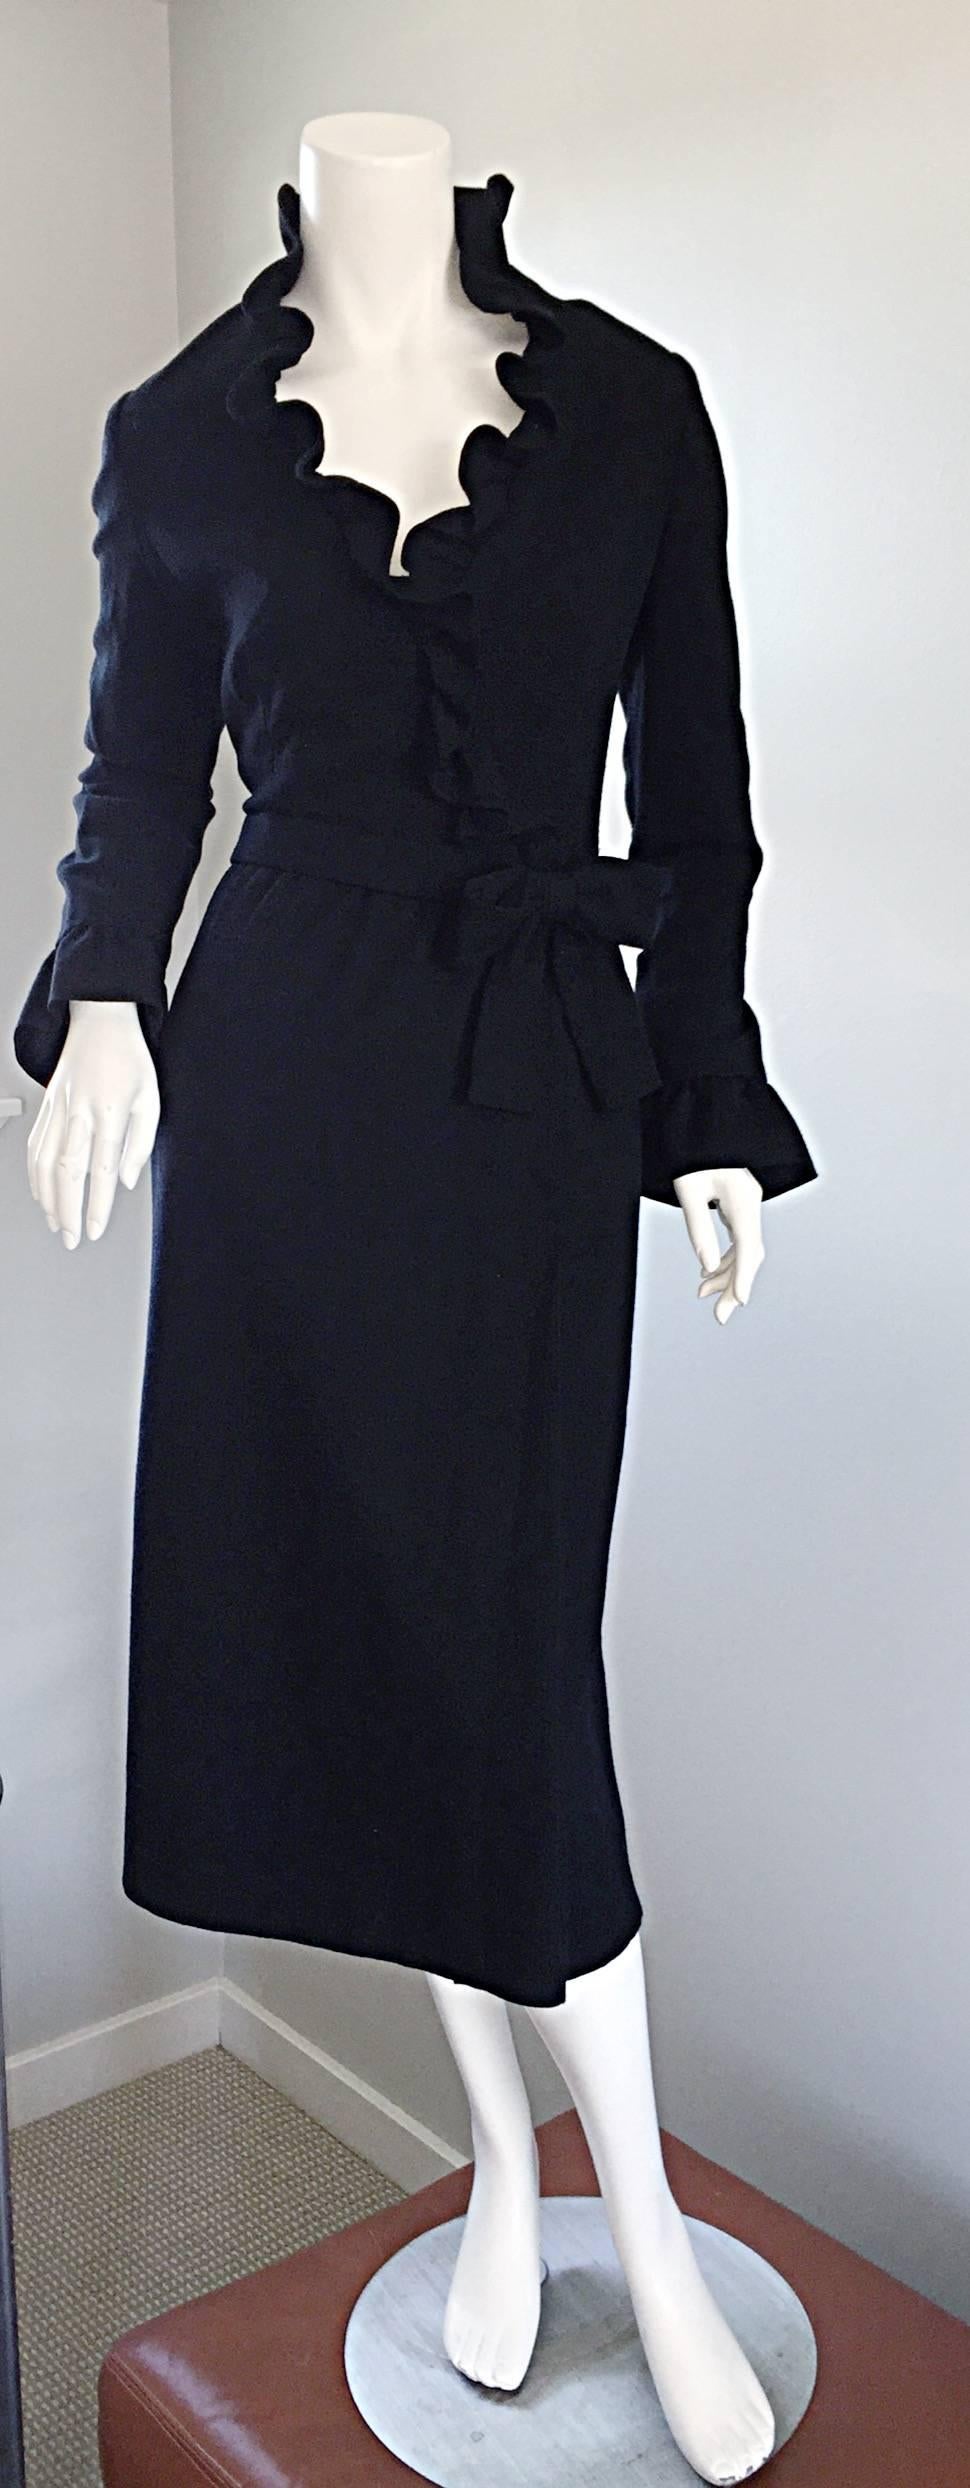 Women's Chic Mollie Parnis 1960s 60s Vintage Black Wool Wrap Dress w/ Ruffles + Bow Belt